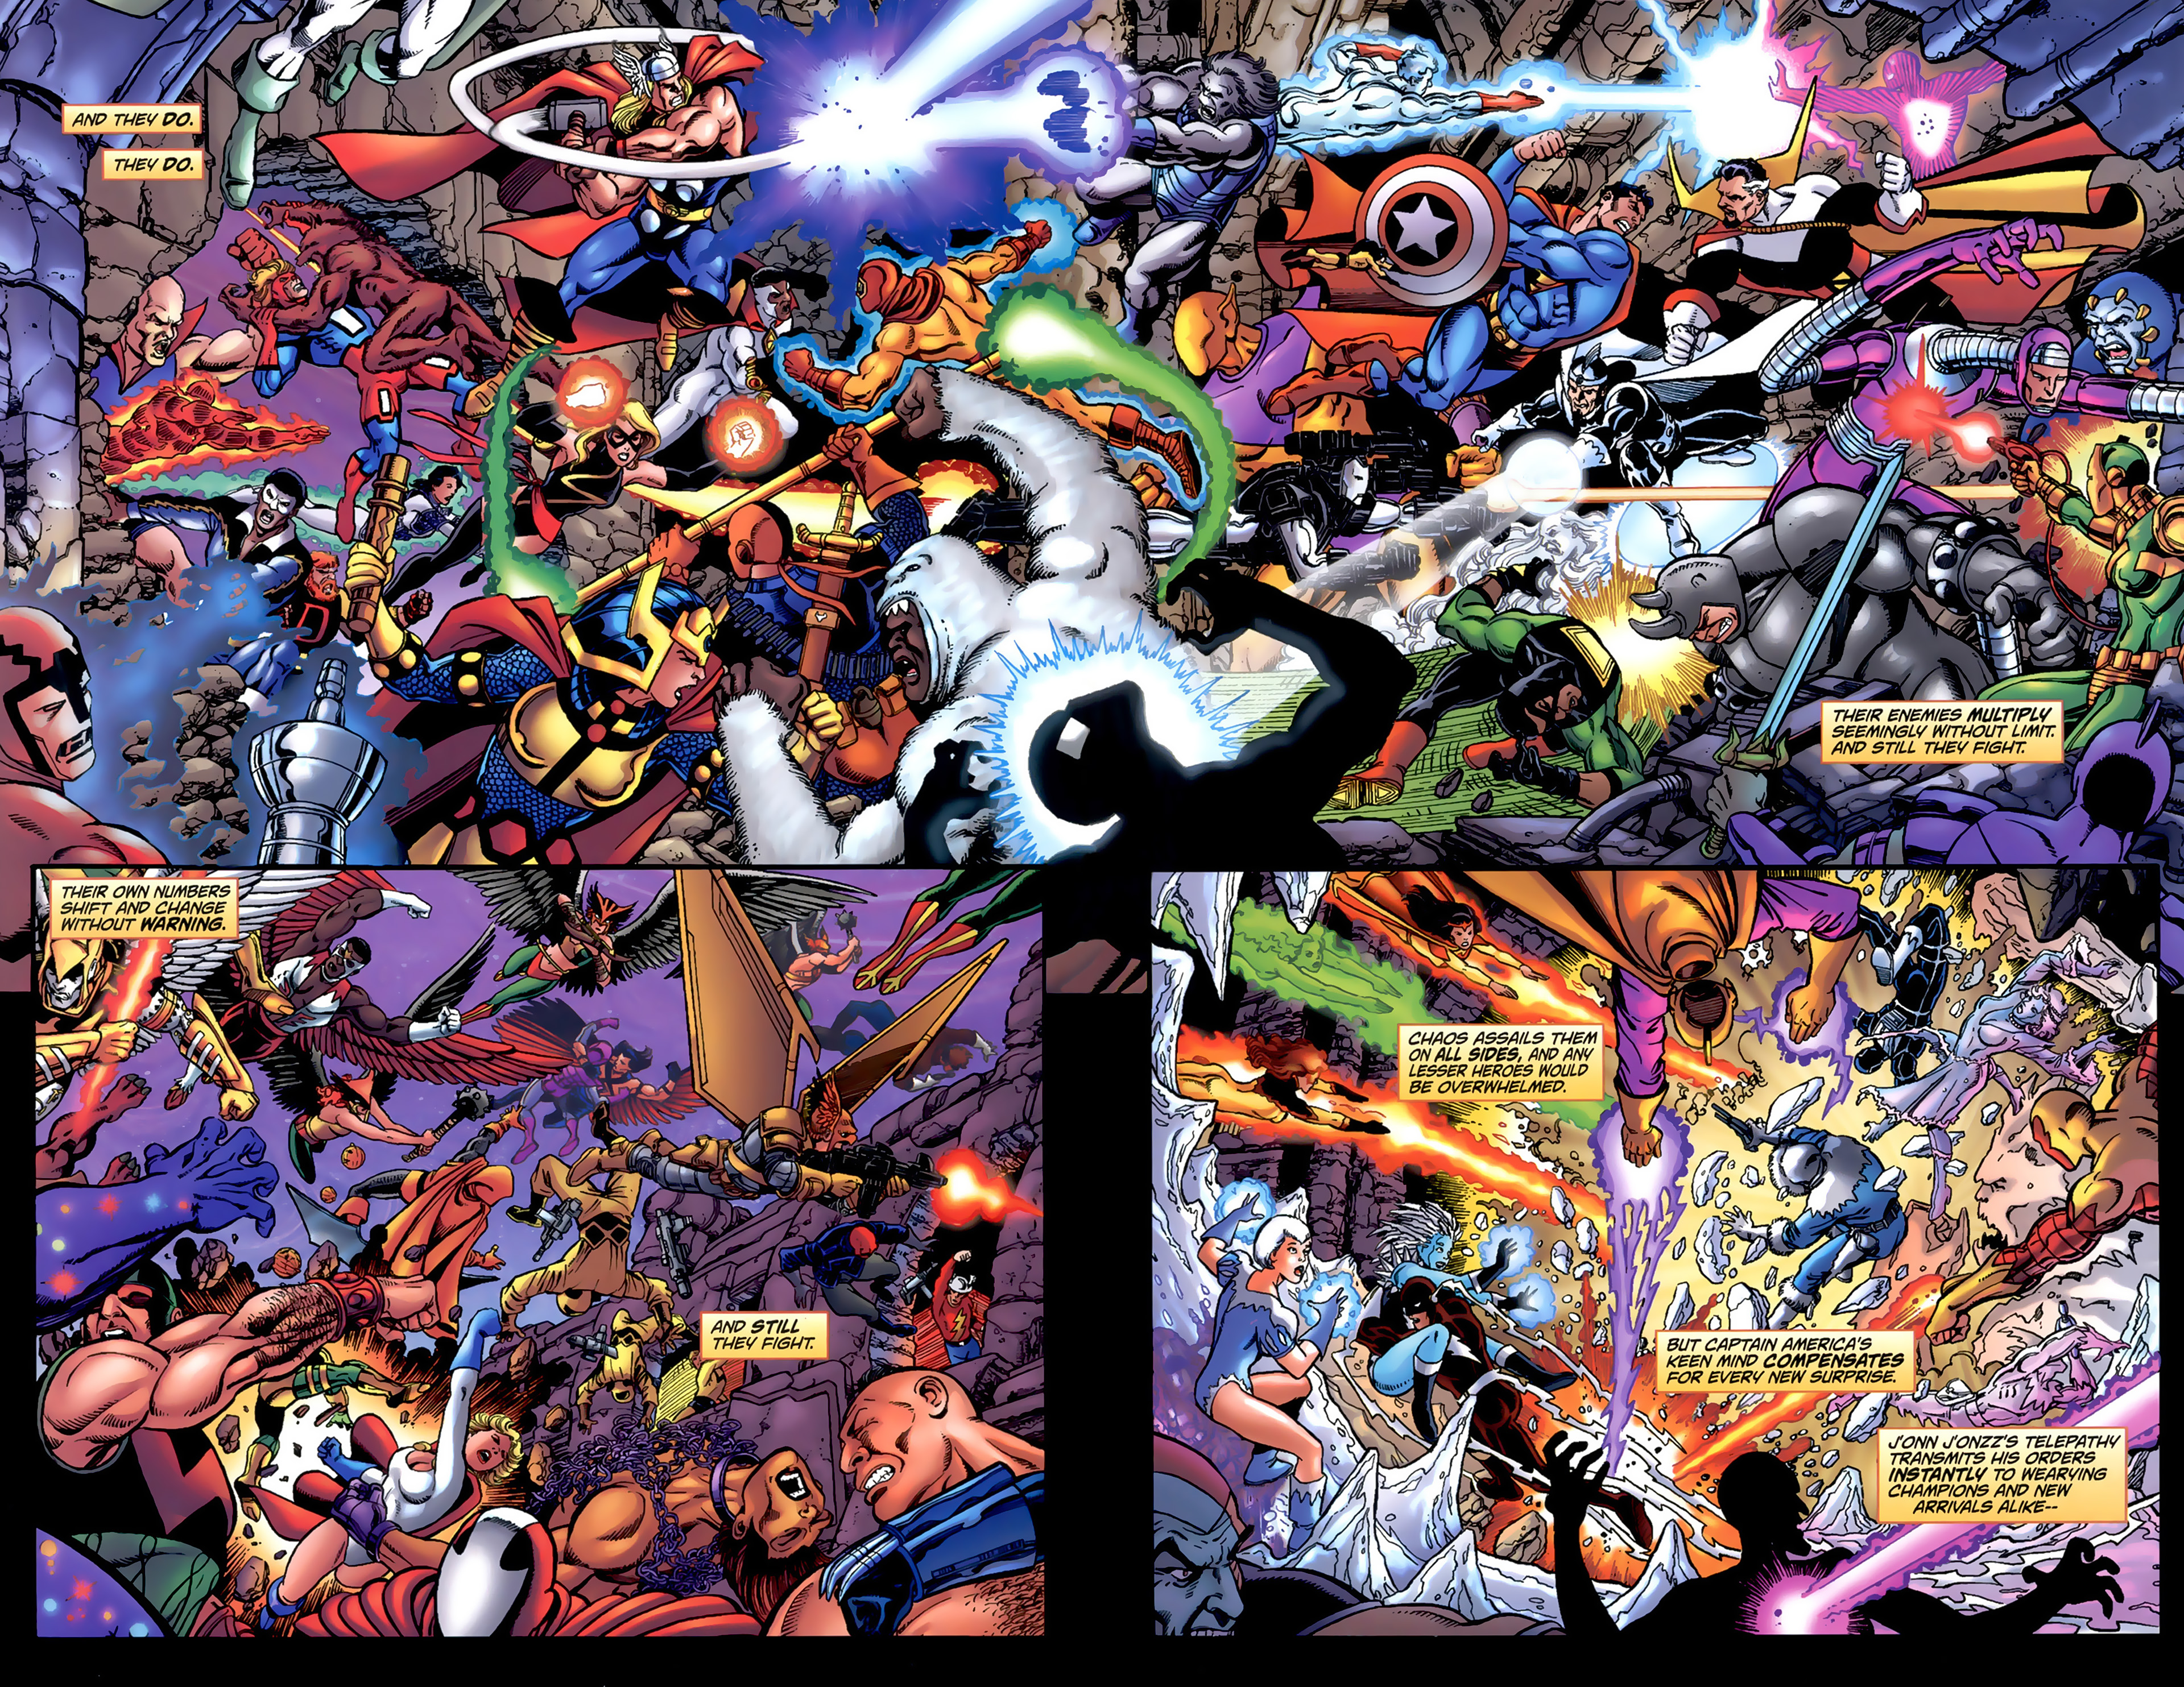 Read online JLA/Avengers comic - Issue #4.